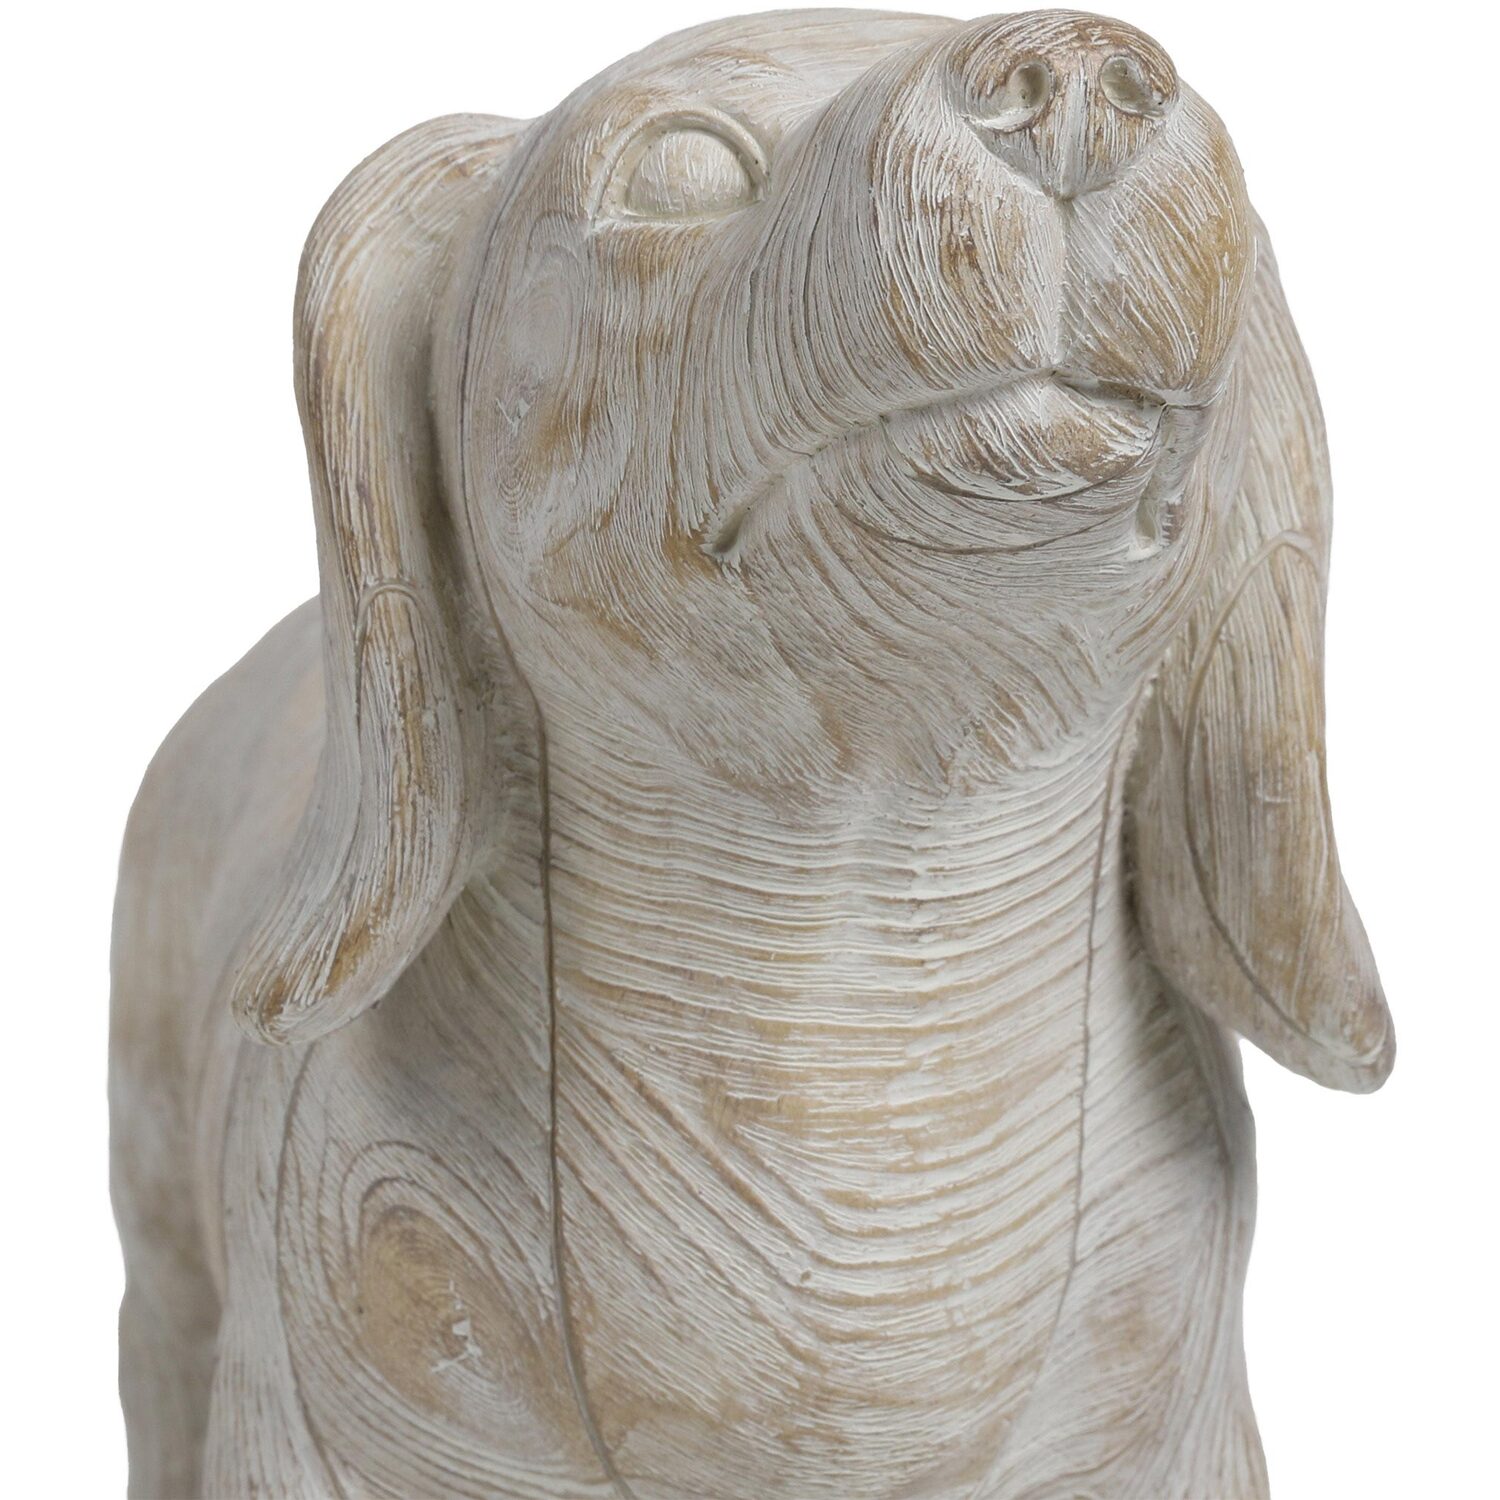 Grey Wood Effect Sausage Dog Ornament Image 4